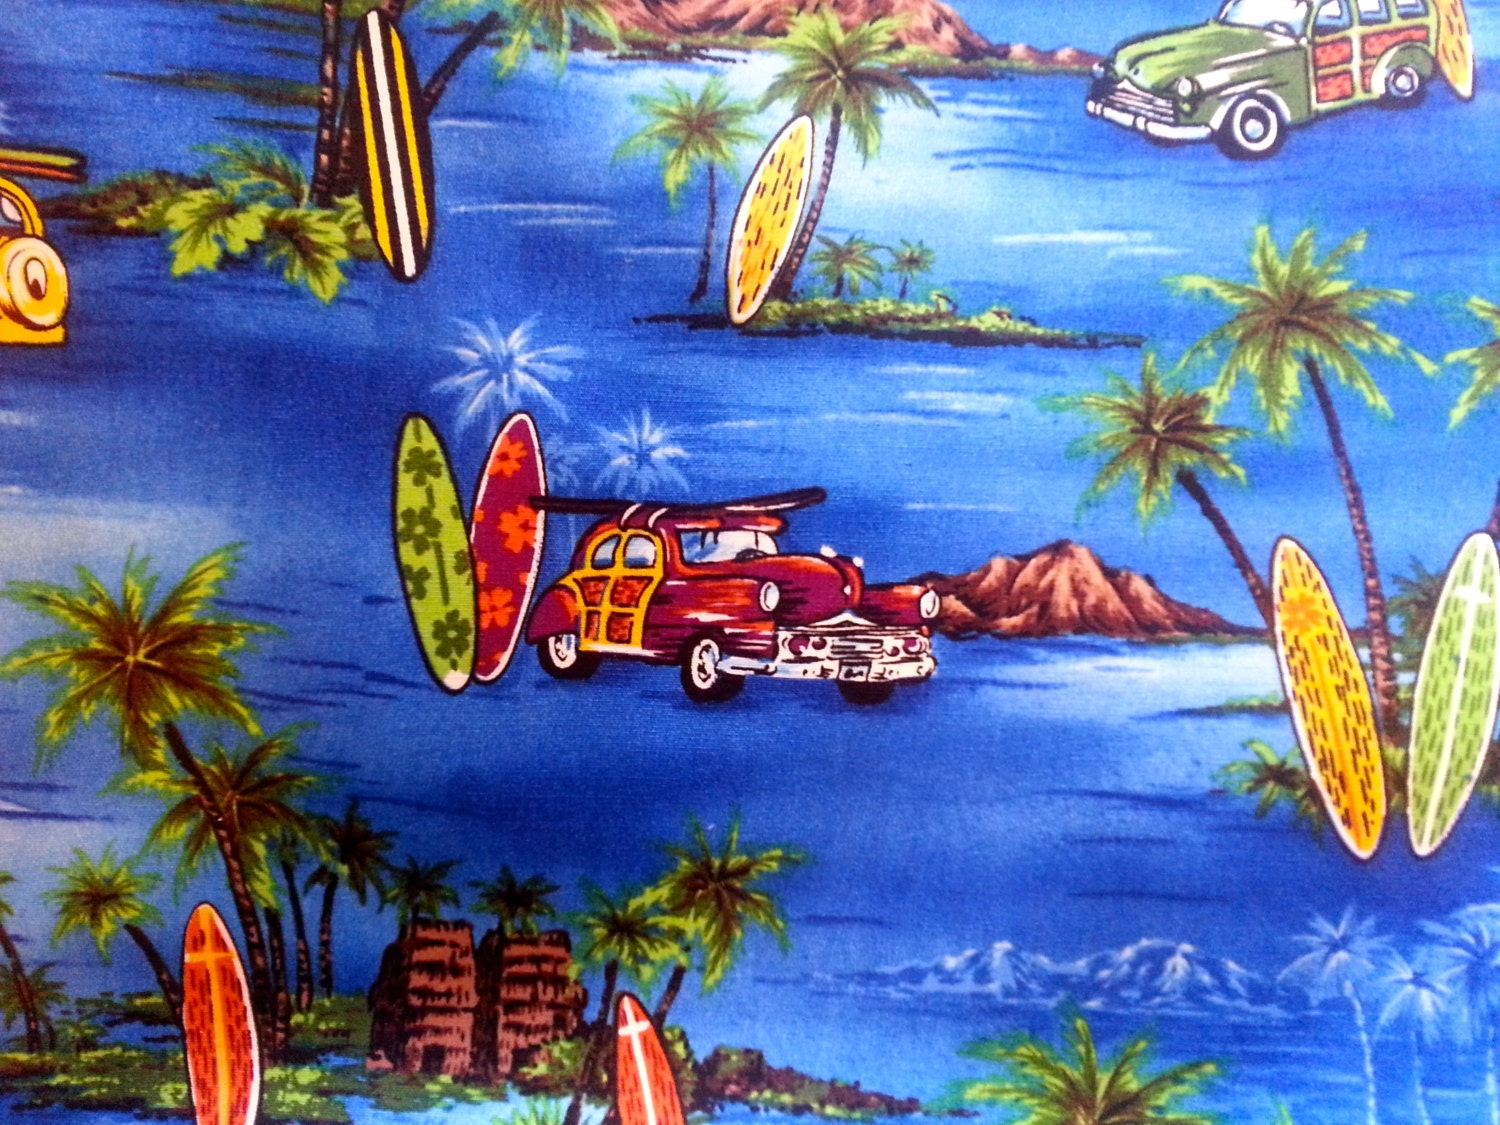 Surfing/Hawaii Cotton Fabric 1 Yard by SakuraGoods on Etsy